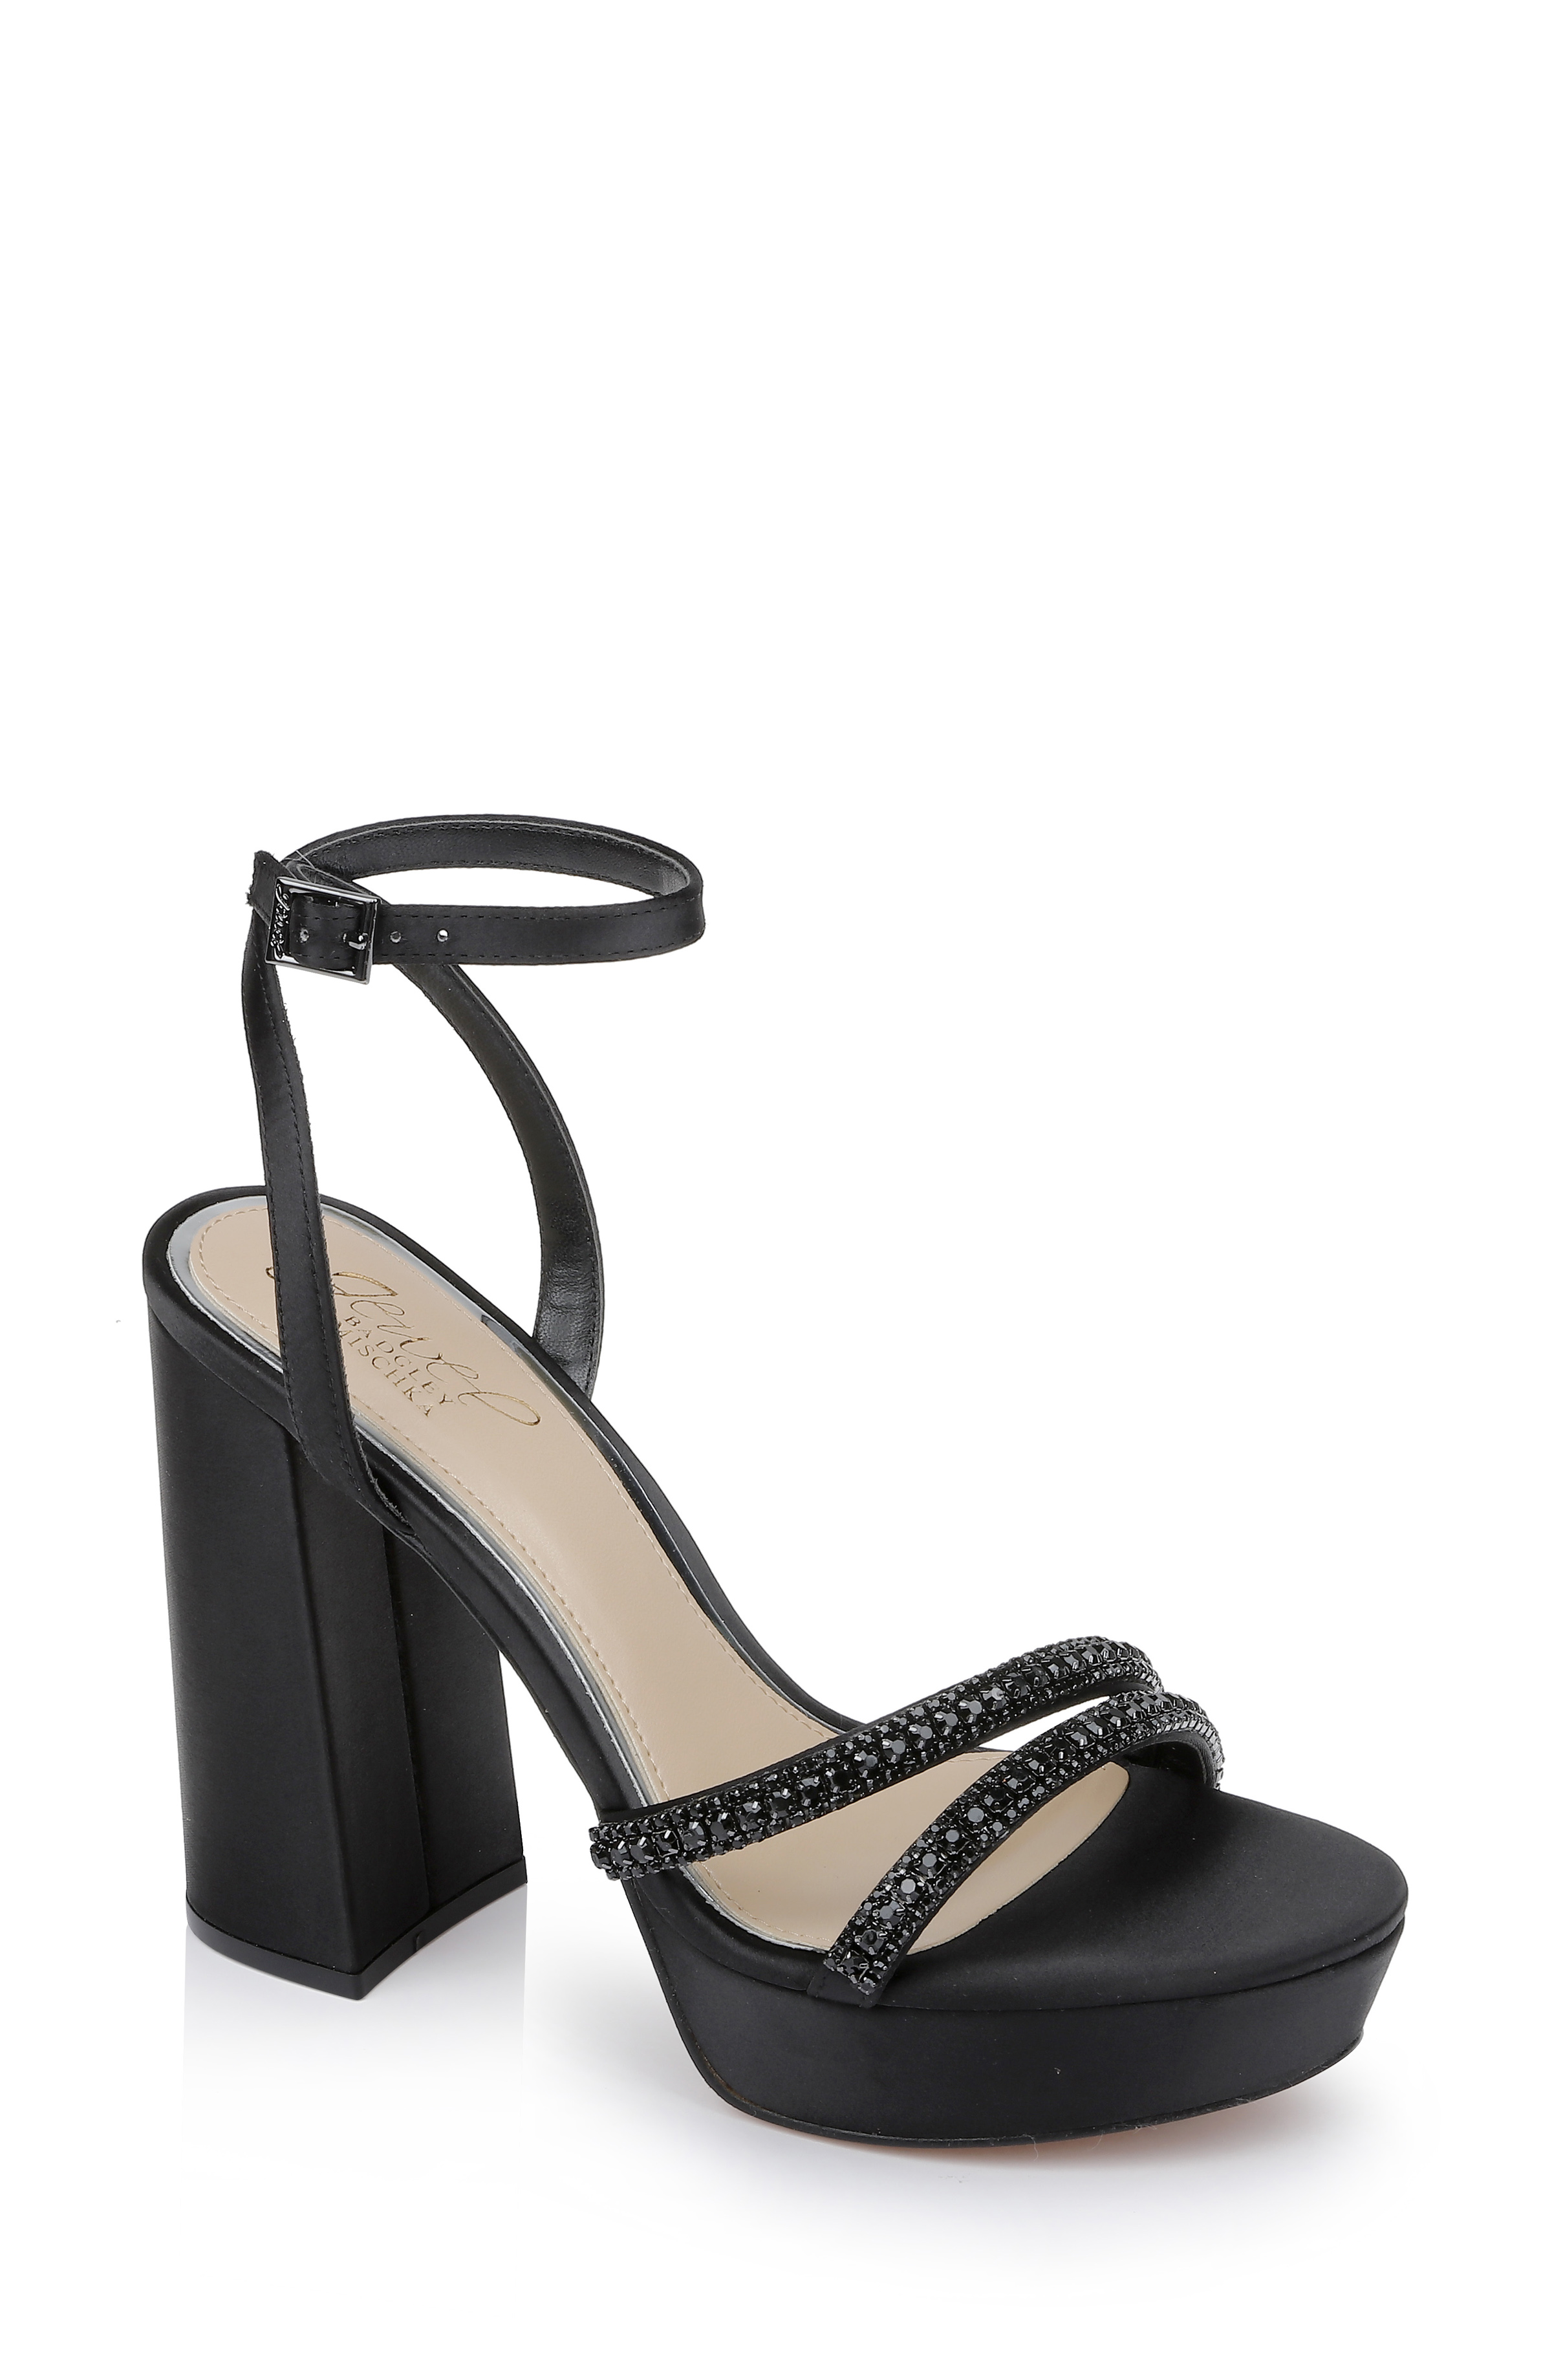 New Look Patent Multi Strap Block Heeled Sandal | New look sandals, Heels, Black  sandals heels